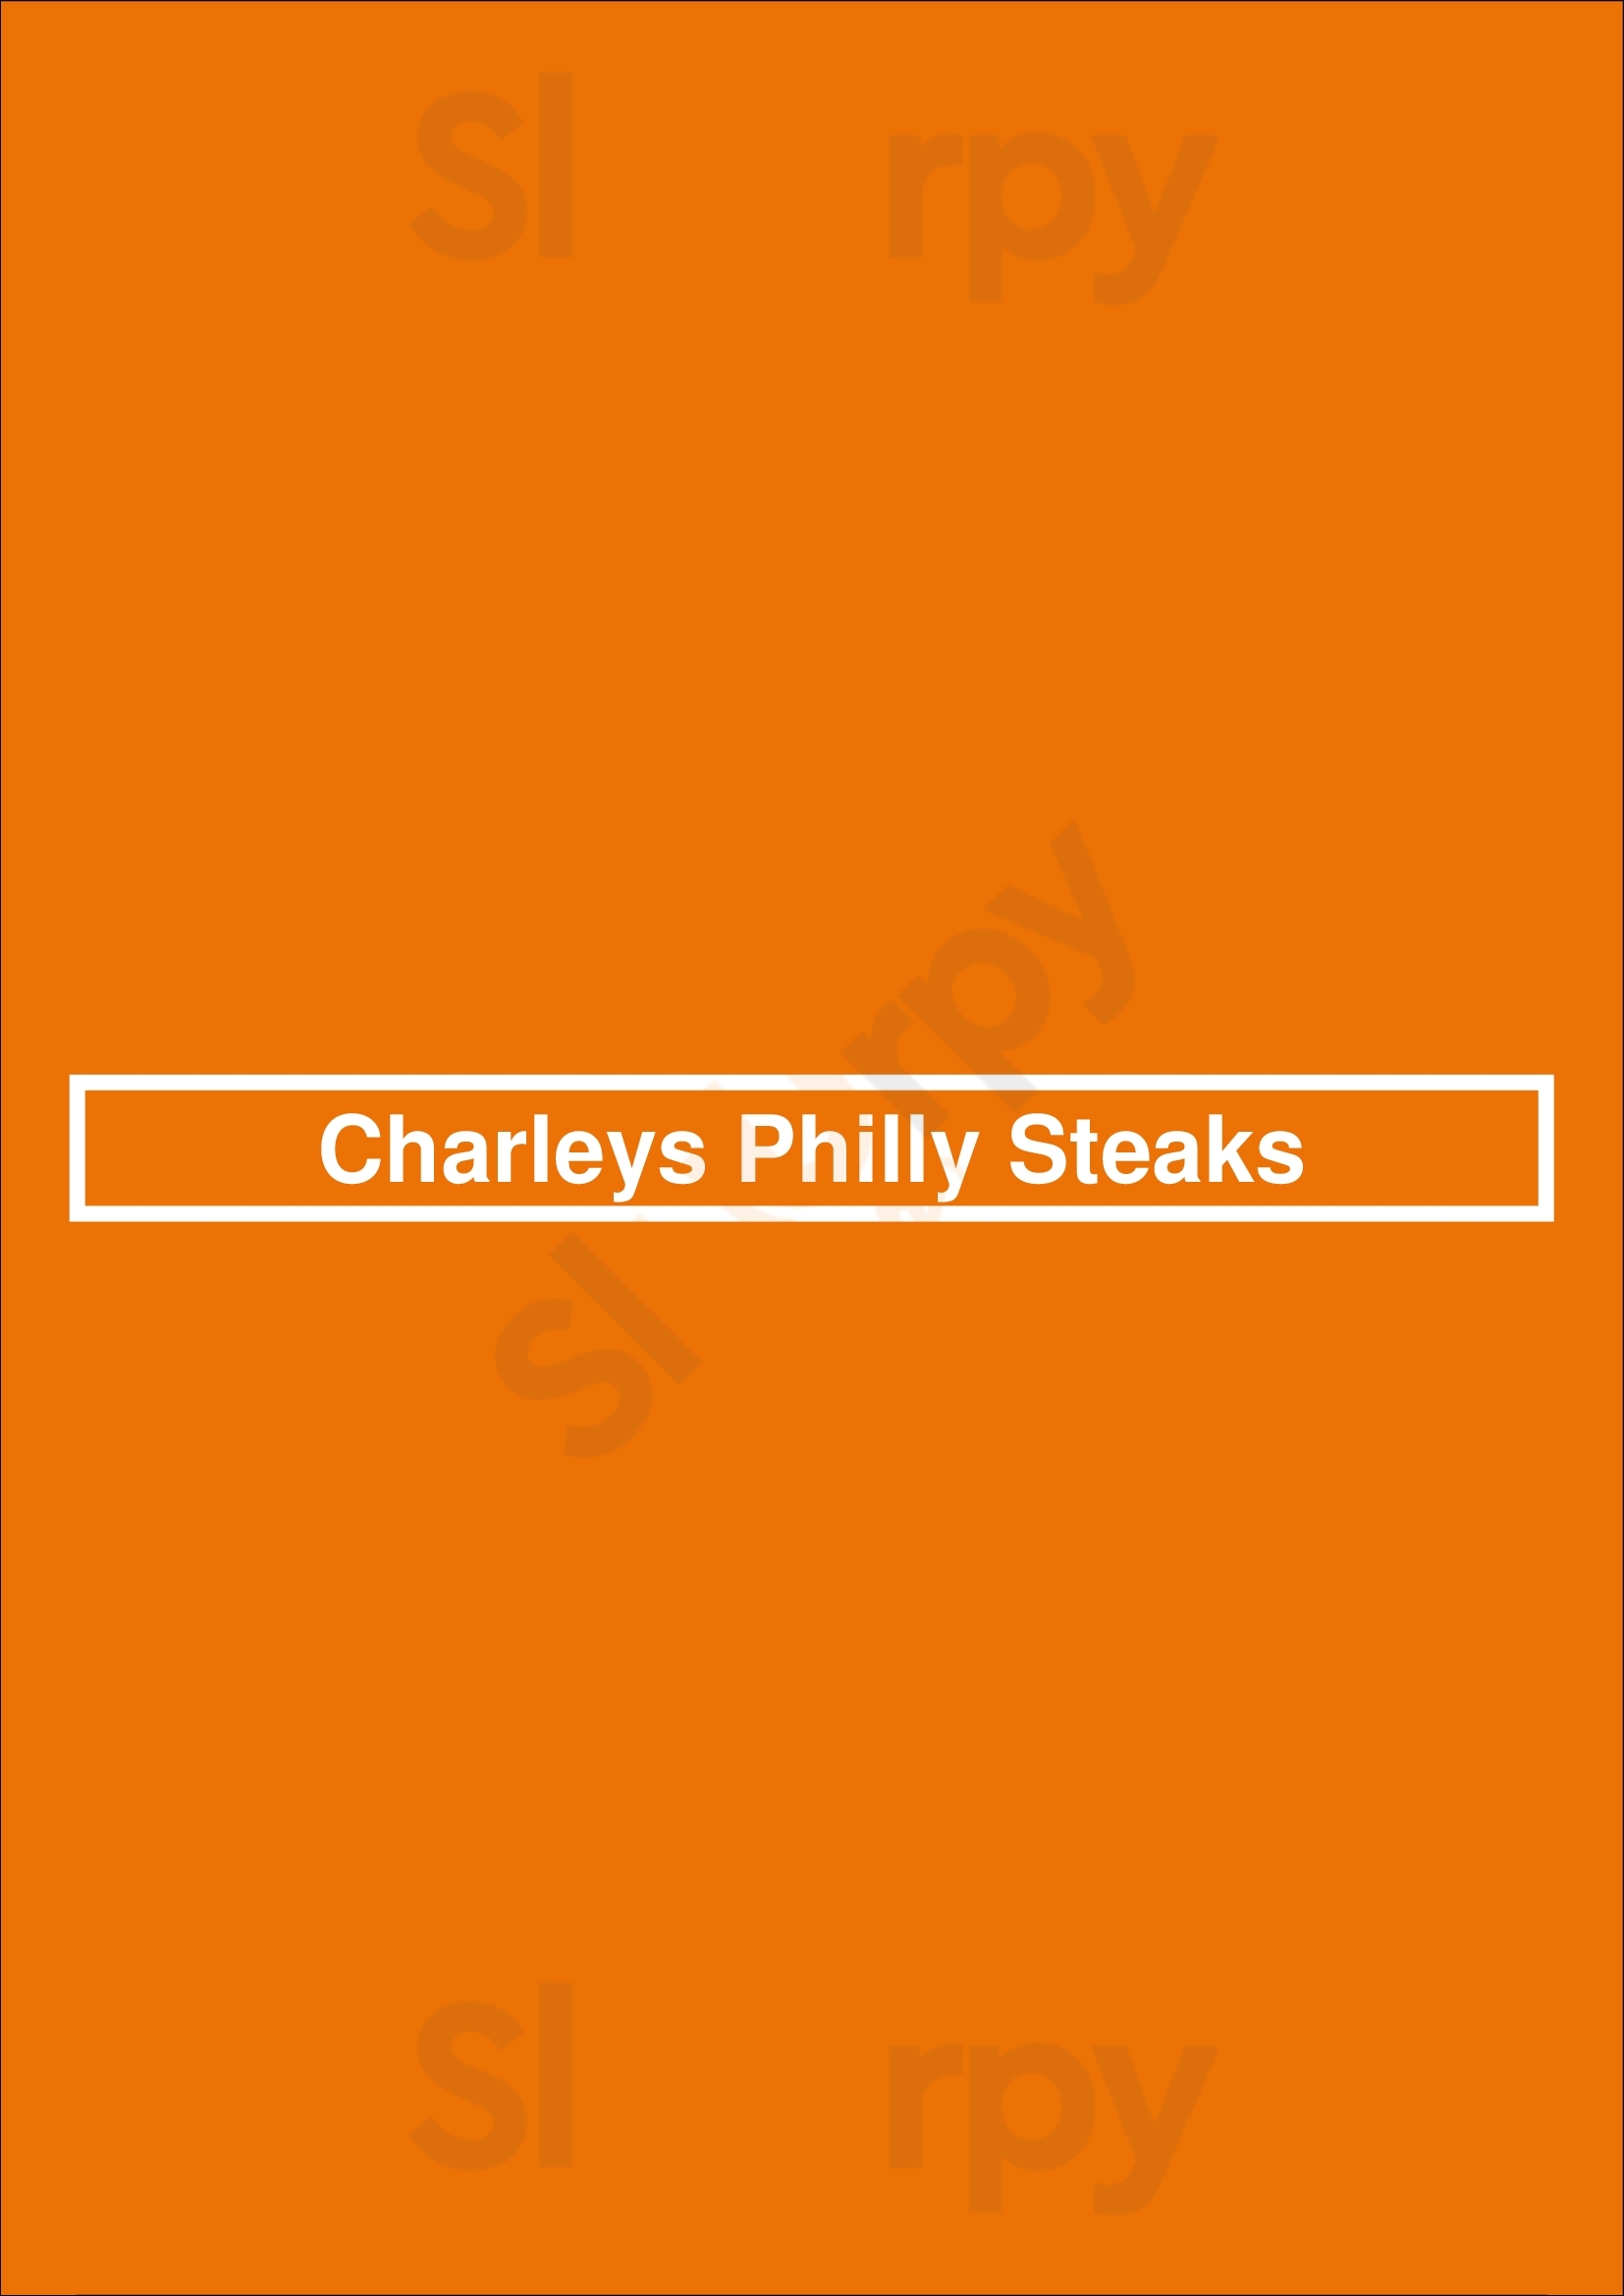 Charleys Philly Steaks Gainesville Menu - 1